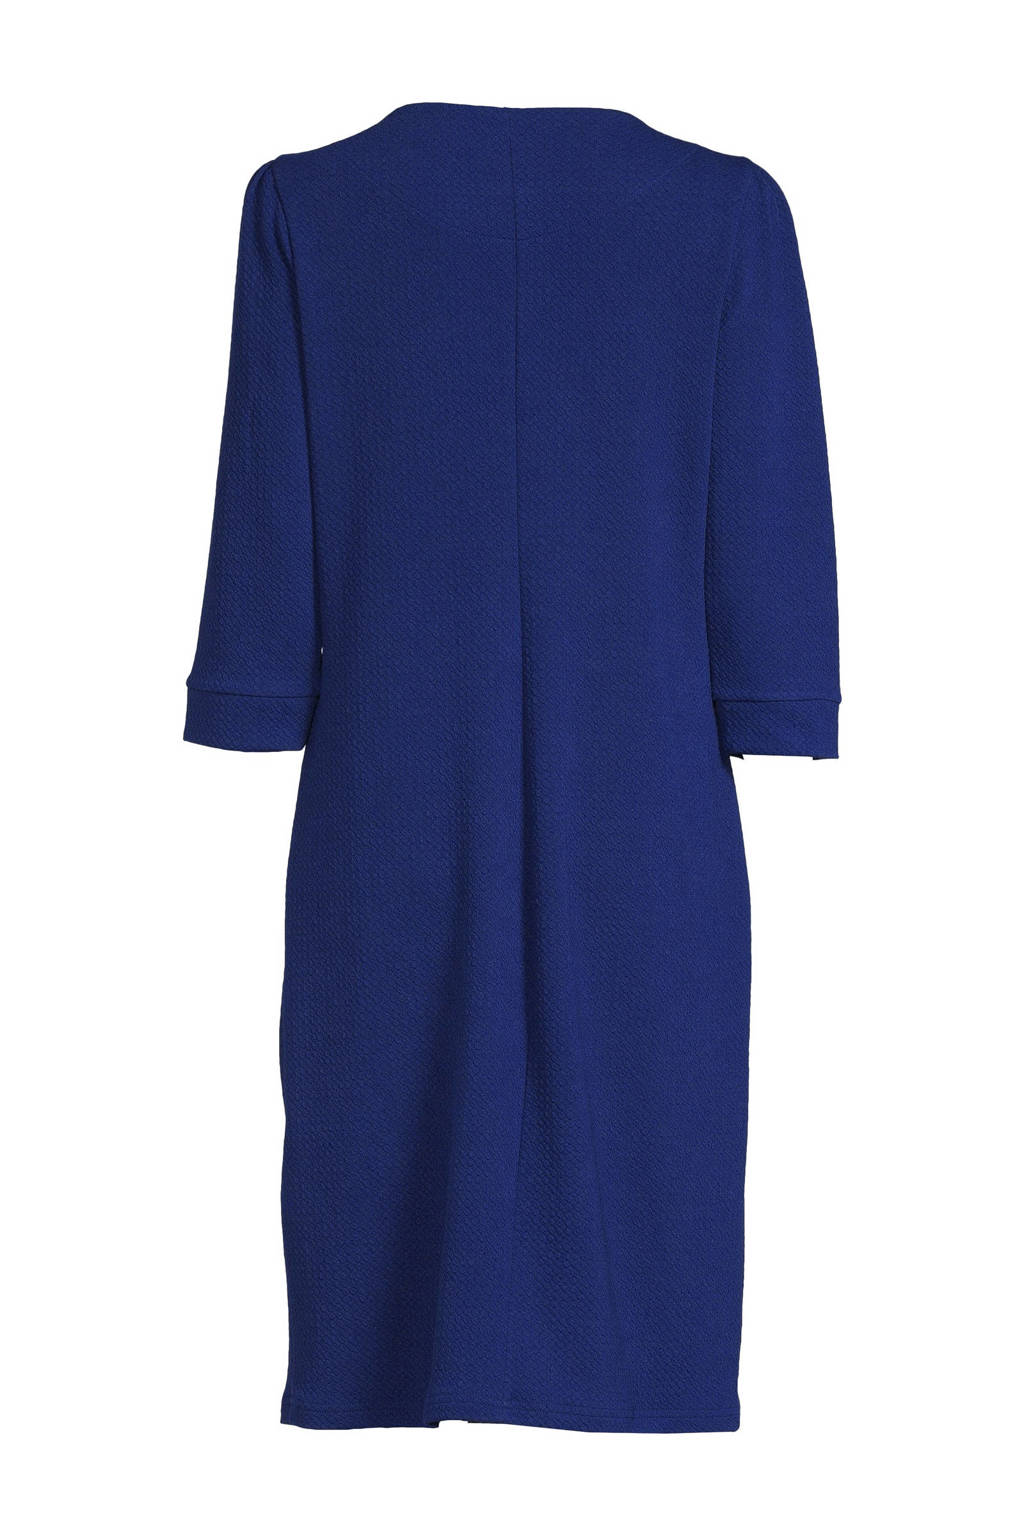 Fransa gebreide jurk blauw wehkamp FRCARLY | textuur met